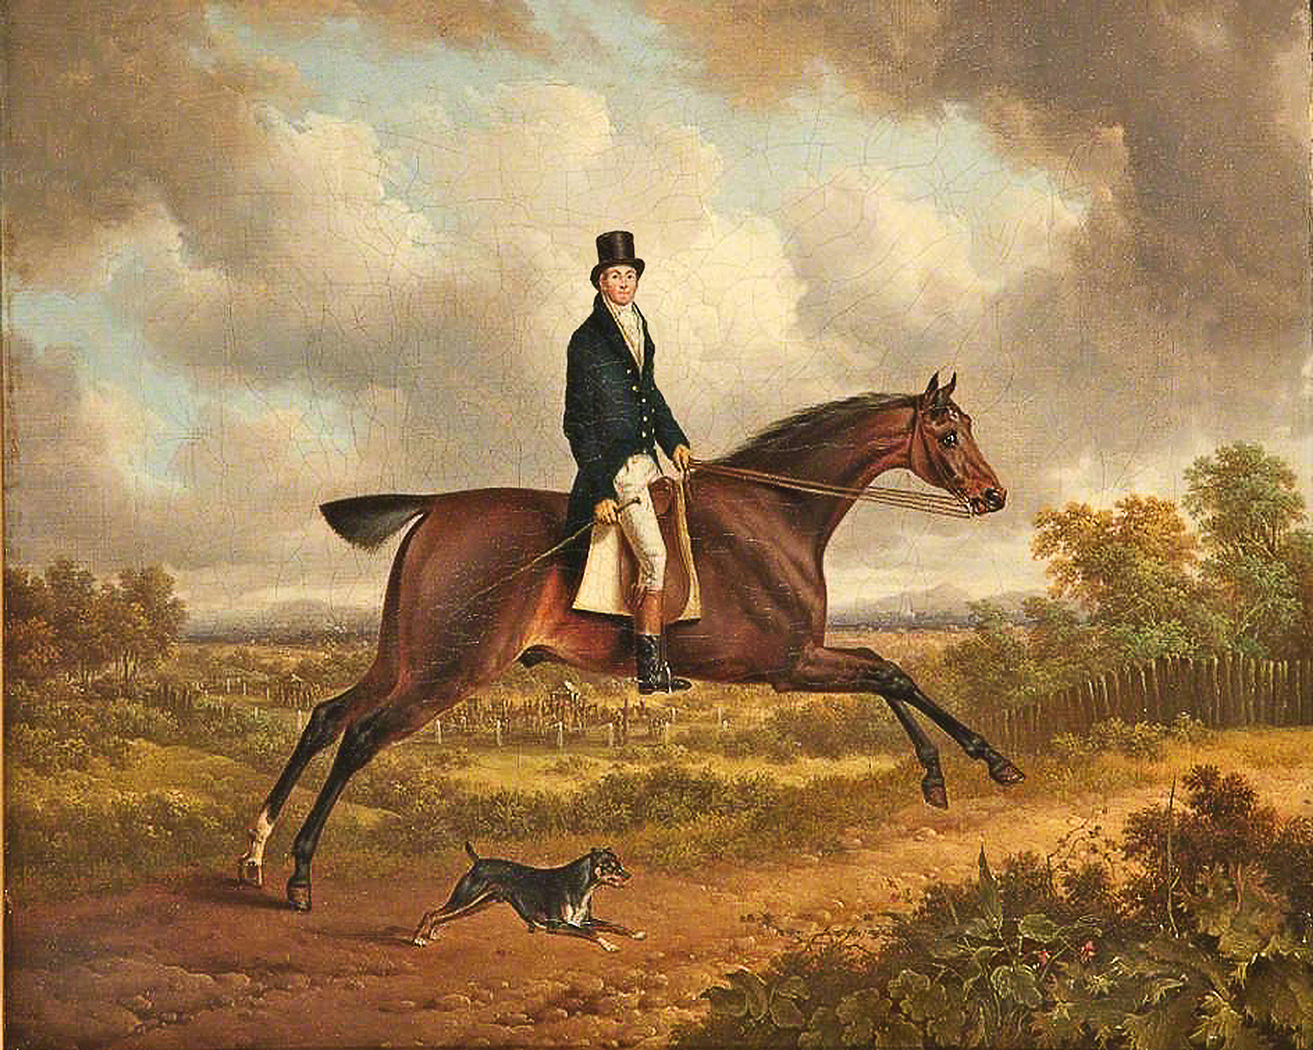 Equestrian/Fox Equestrian Down the Path Equestrian Fox Hunt Scene Oil Painting Print Reproduction on Canvas